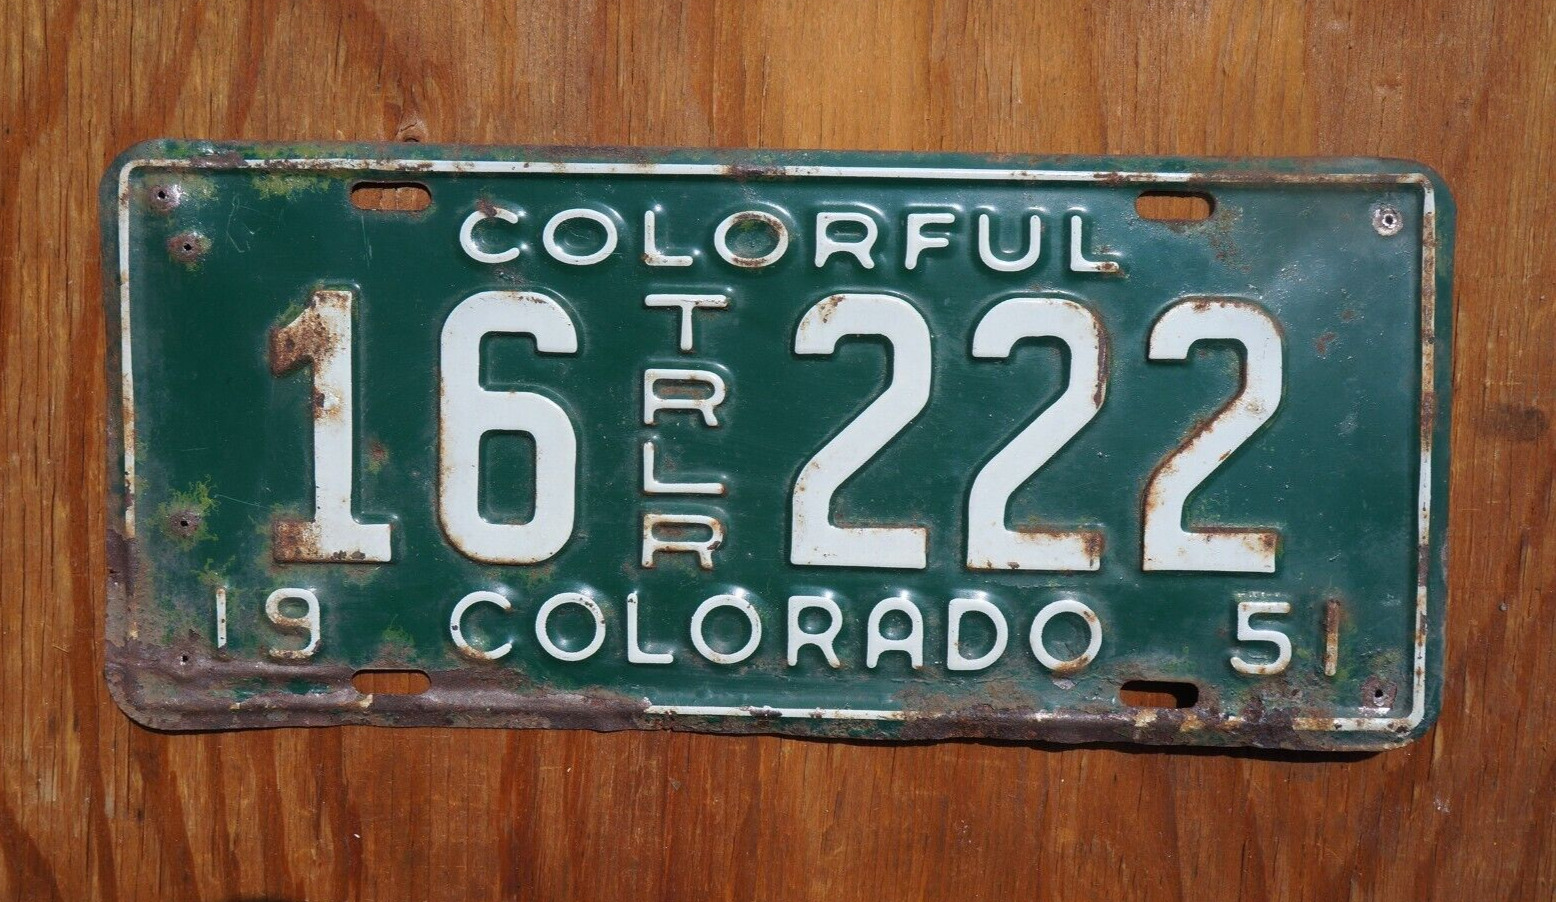 1951 COLORADO Trailer License Plate # 16 - 222